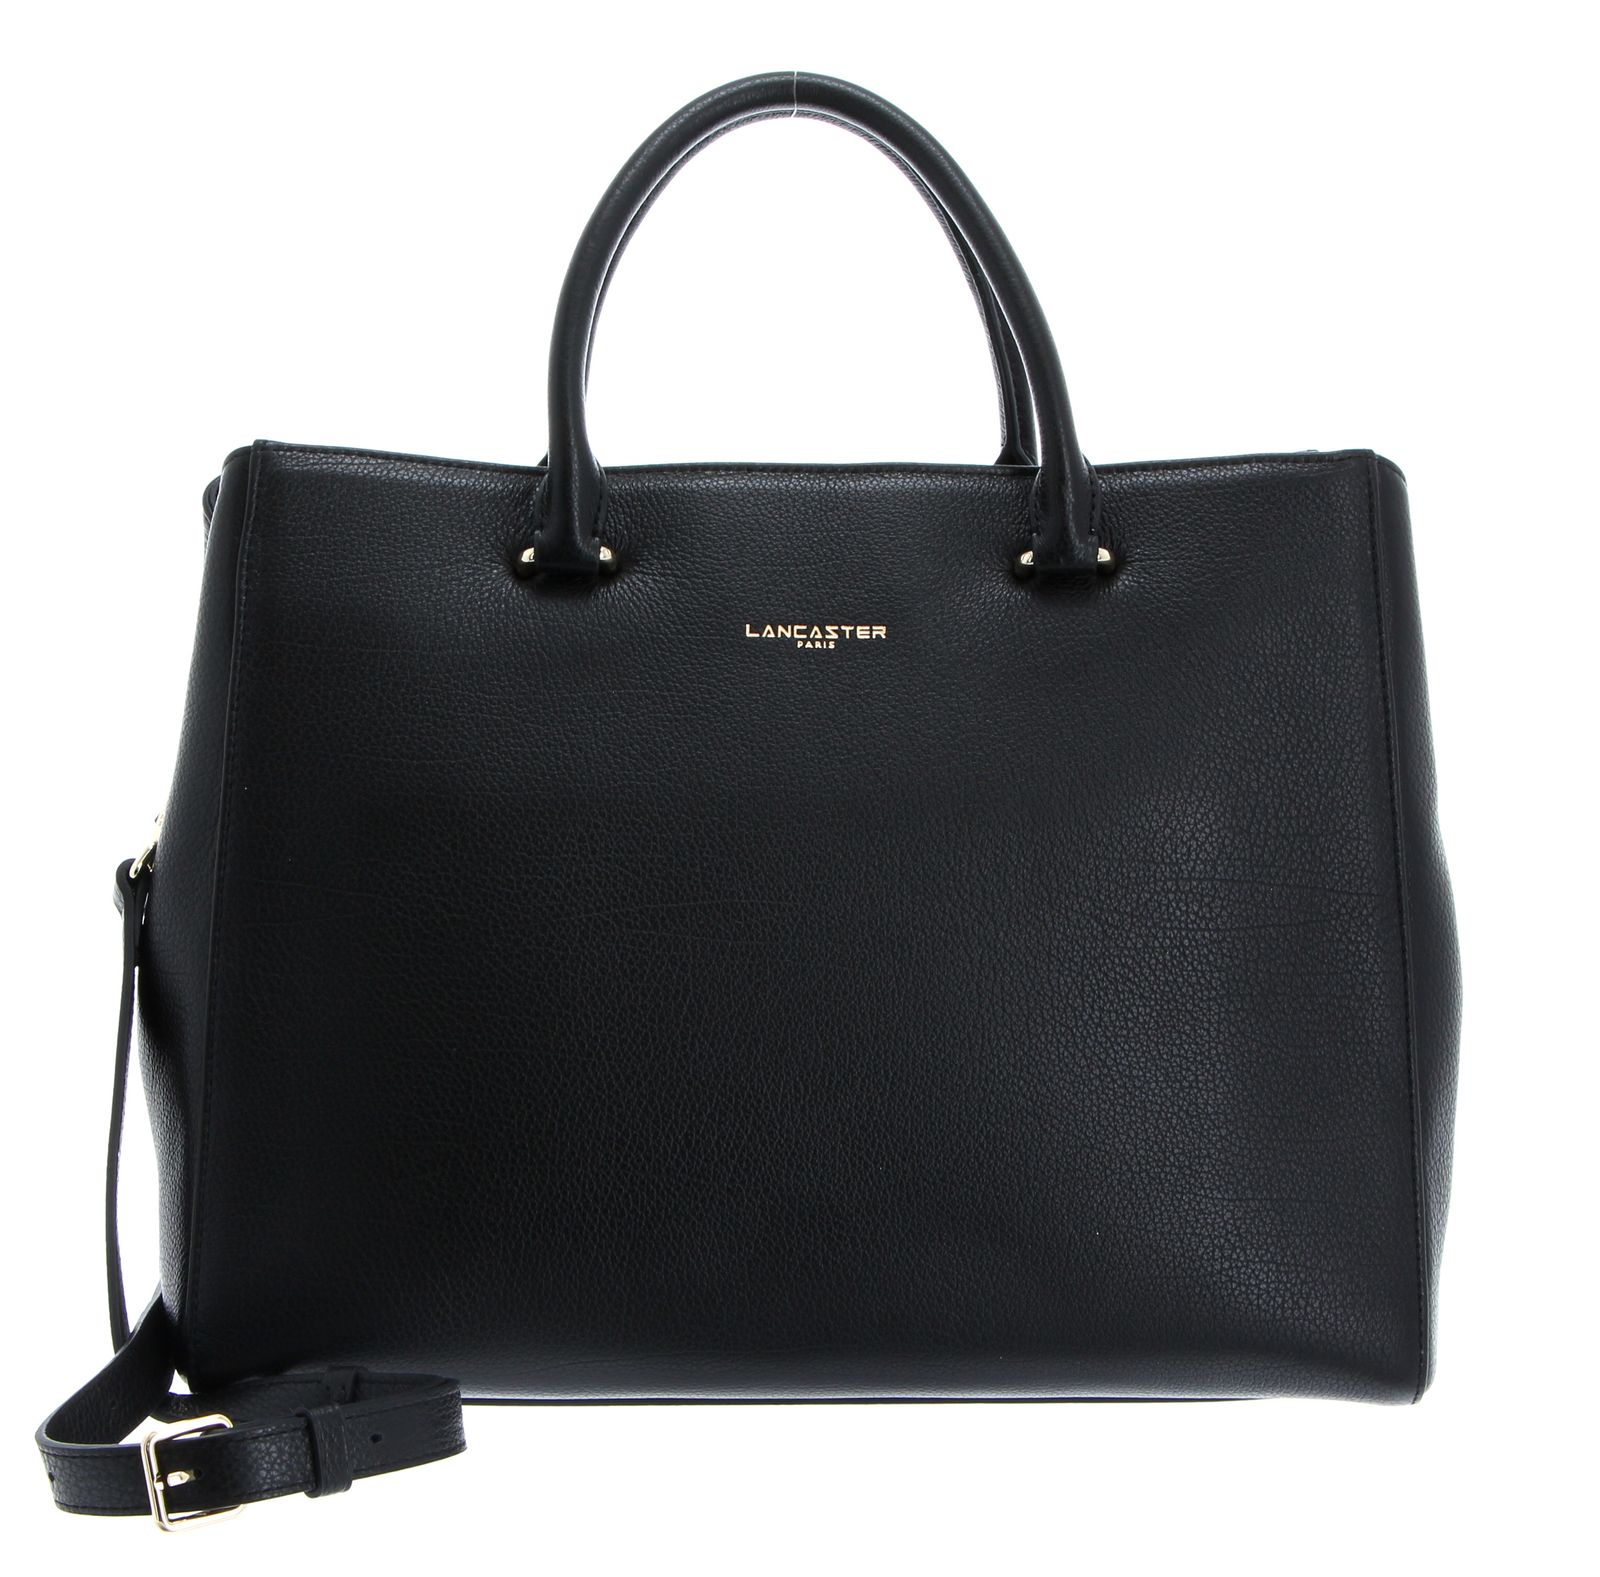 LANCASTER handbag Dune Handbag Noir | Buy bags, purses & accessories ...